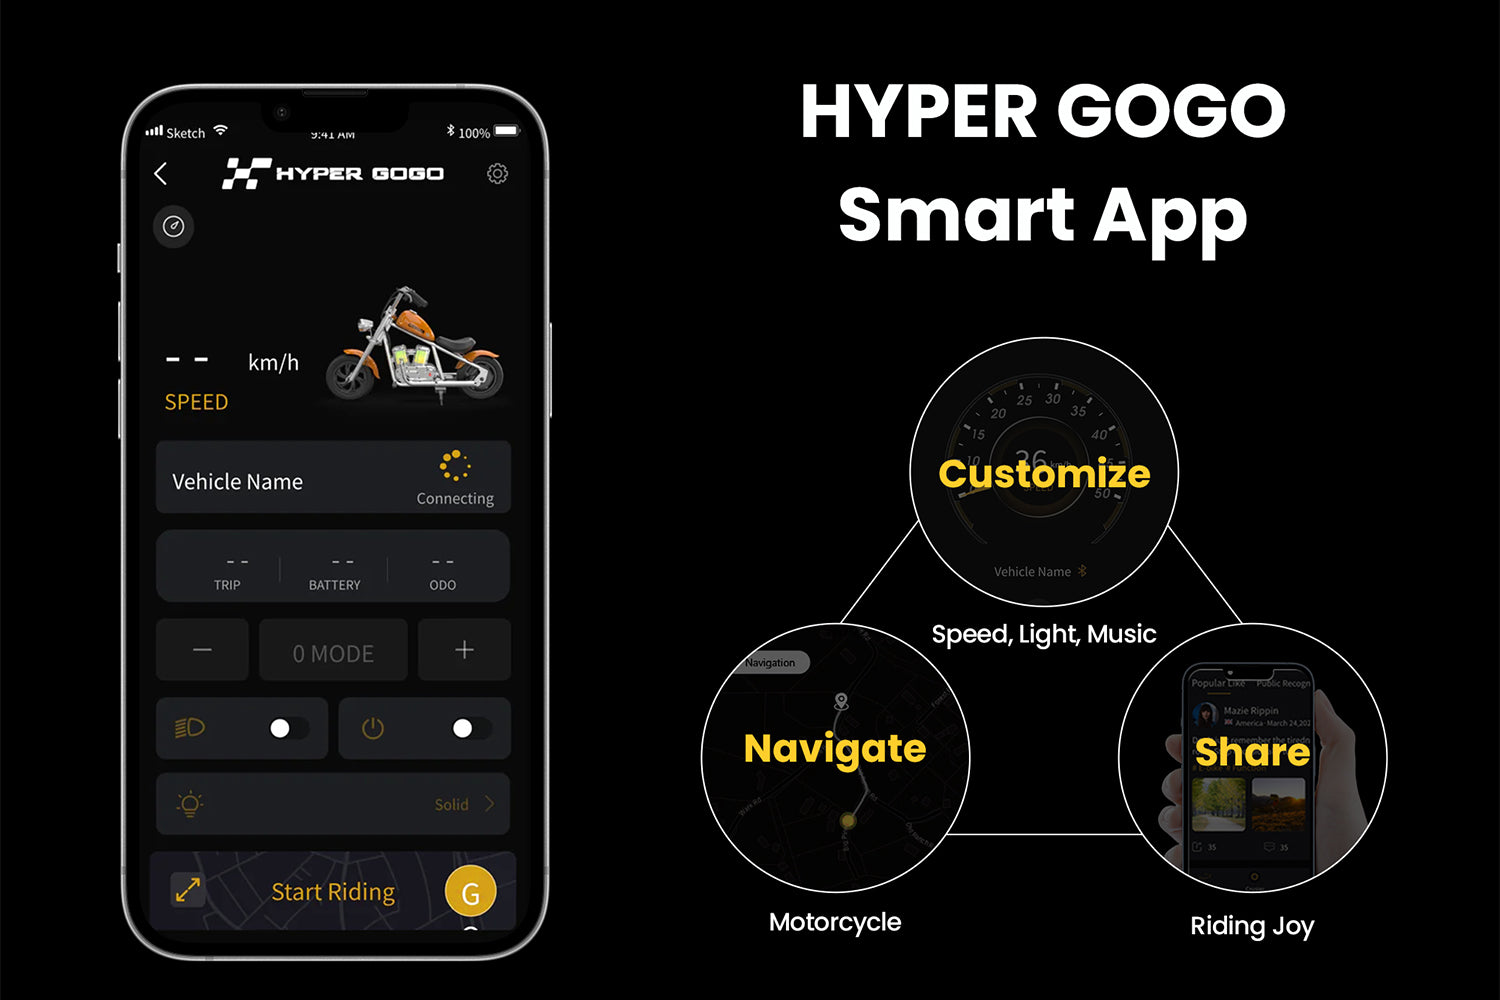 HYPER GOGO App Usage Guide